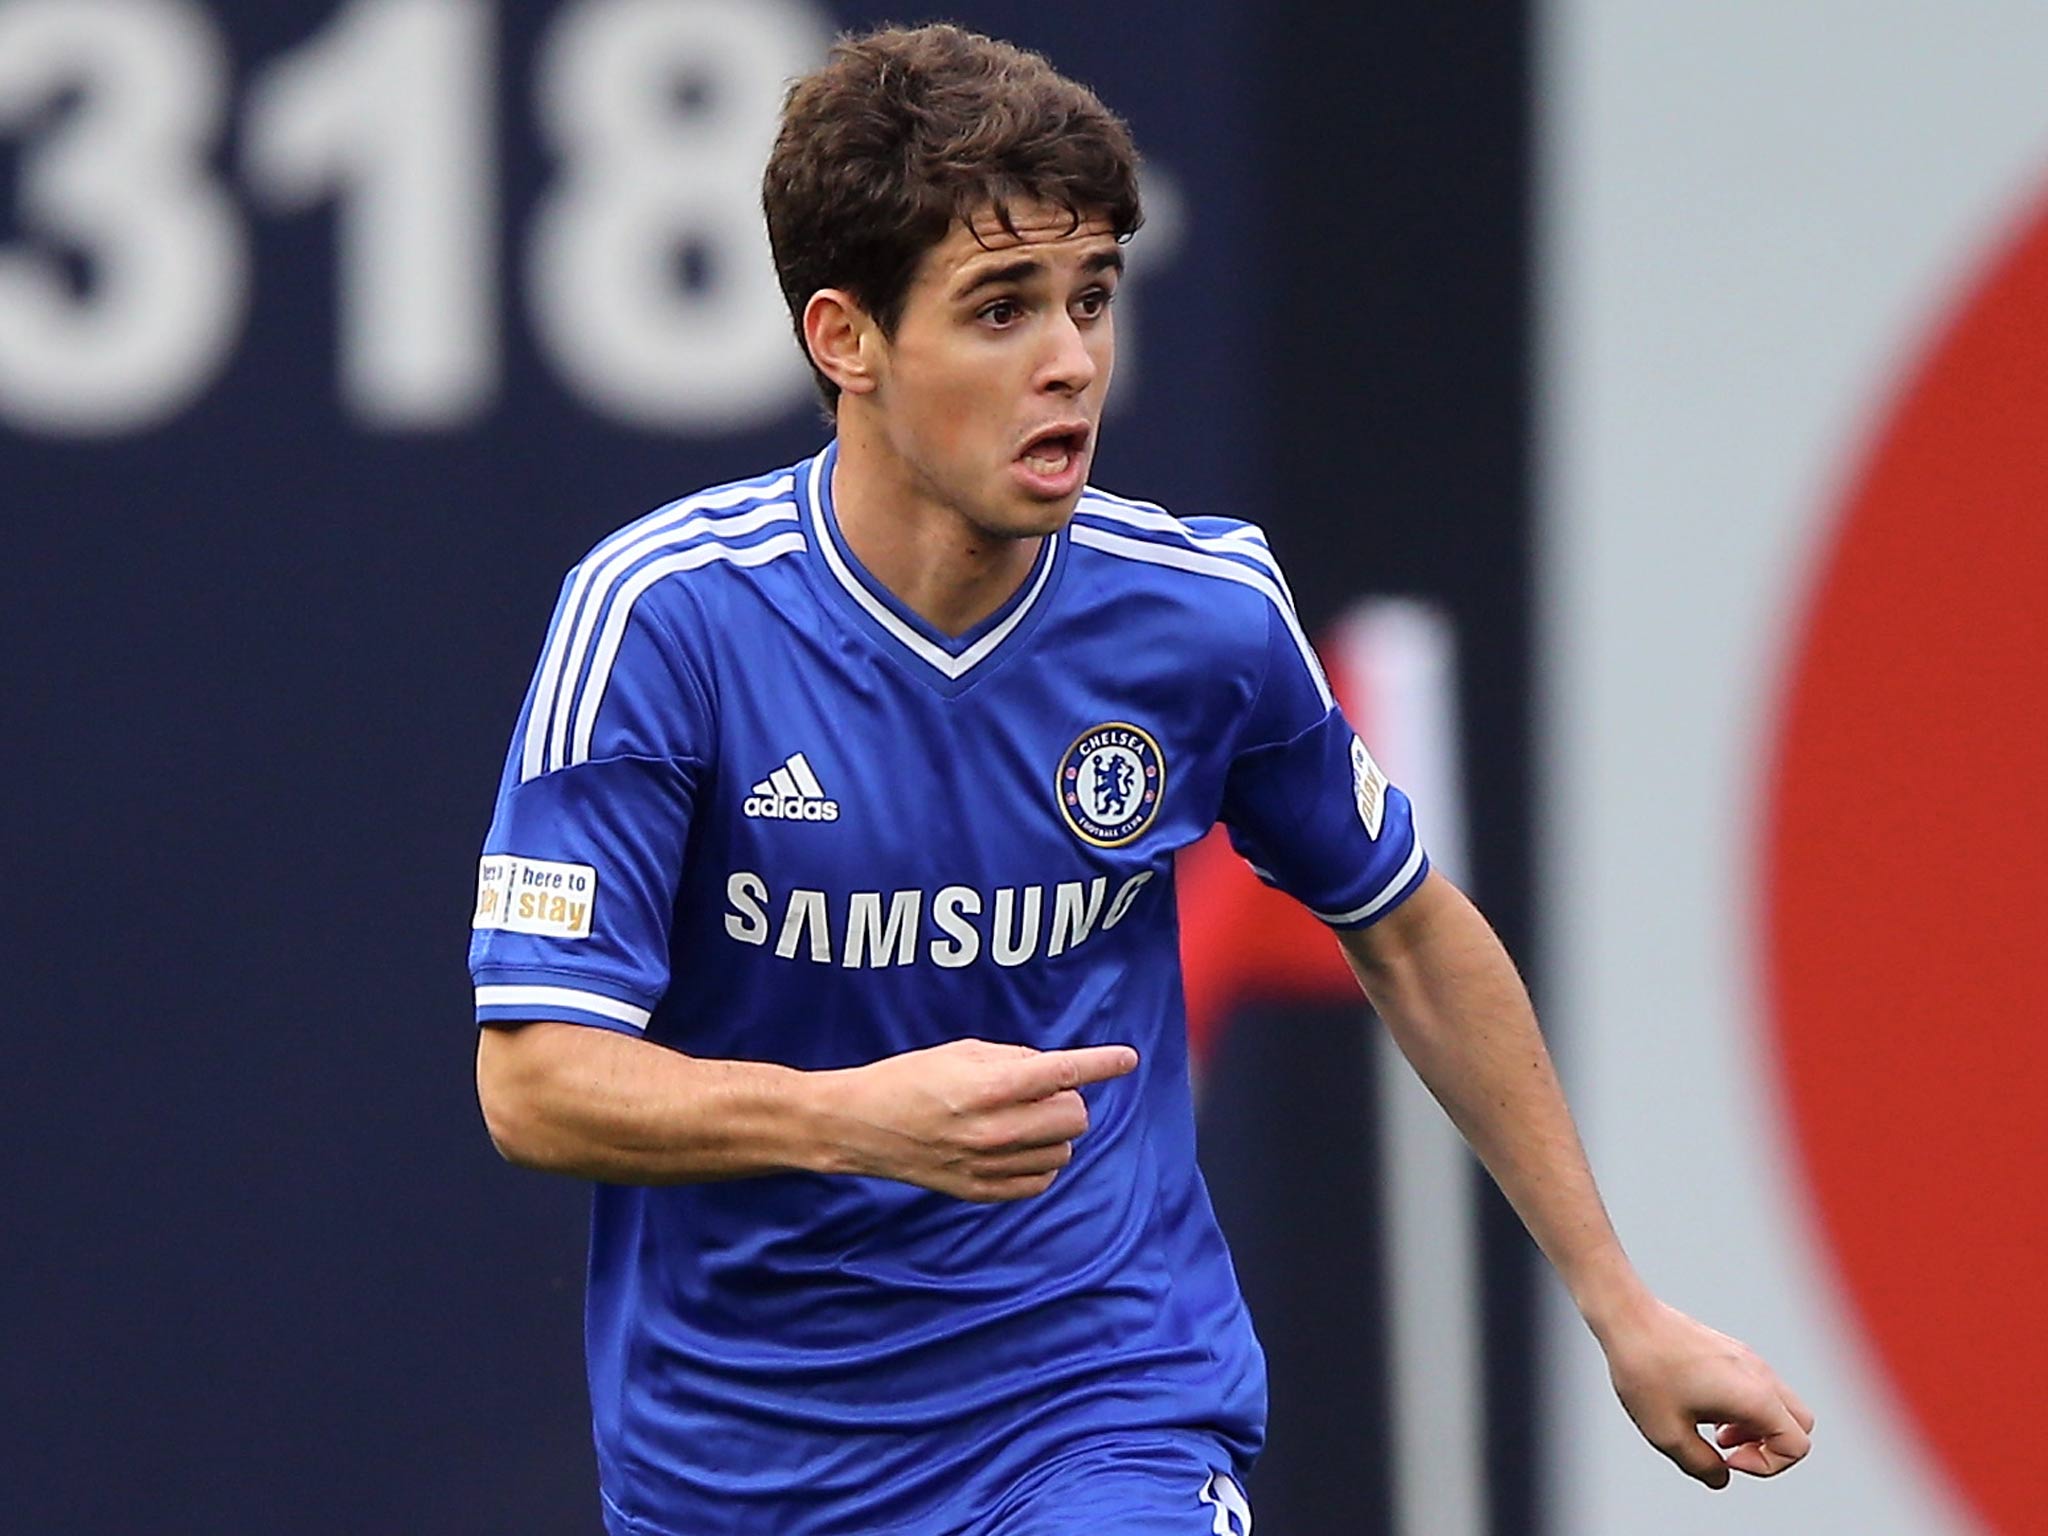 Chelsea playmaker Oscar